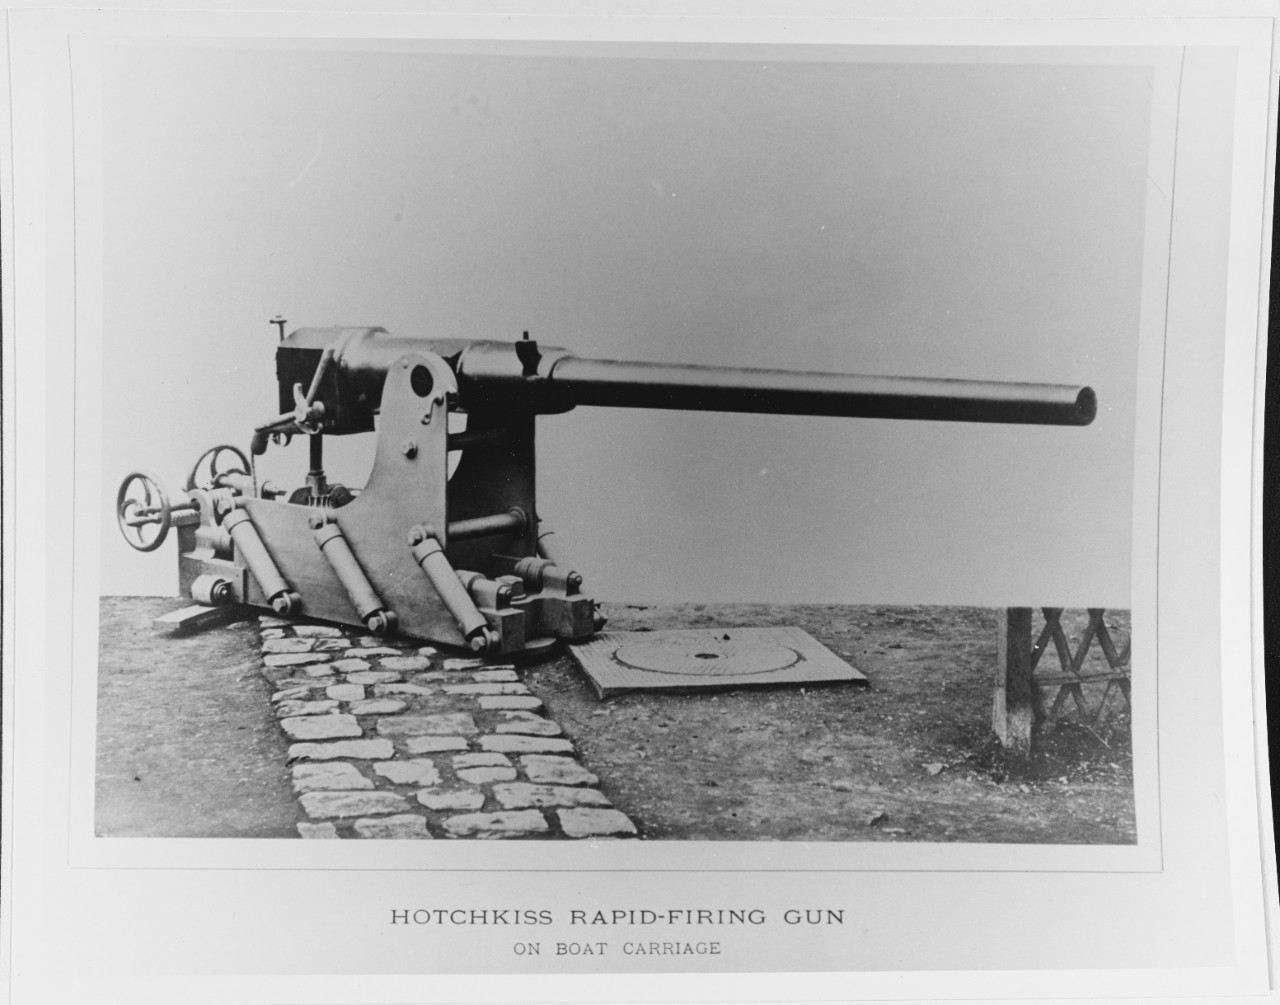 Hotchkiss rapid-firing gun (47mm or 57mm), on the Hotchkiss boat gun carriage.